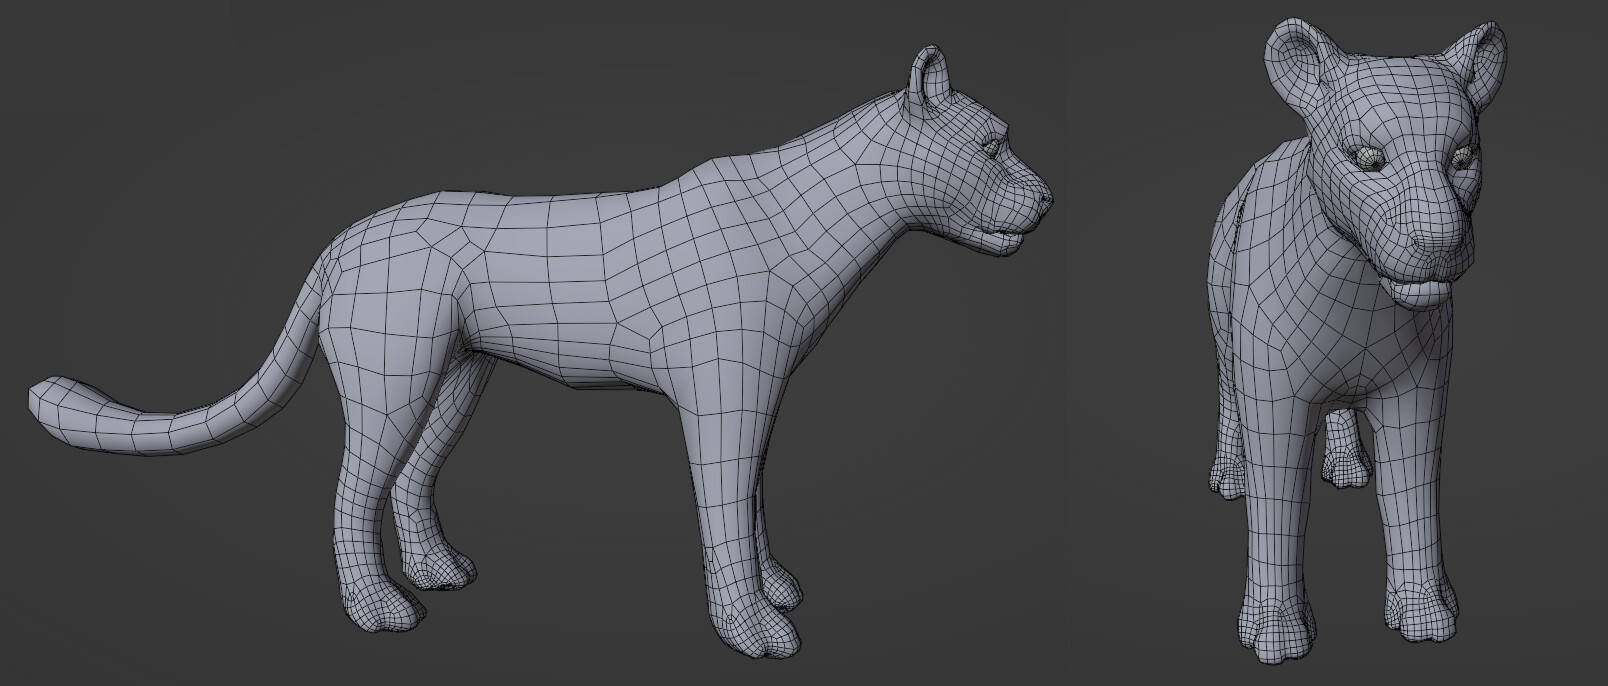 ArtStation - 3D Fantasy lion model for character creator